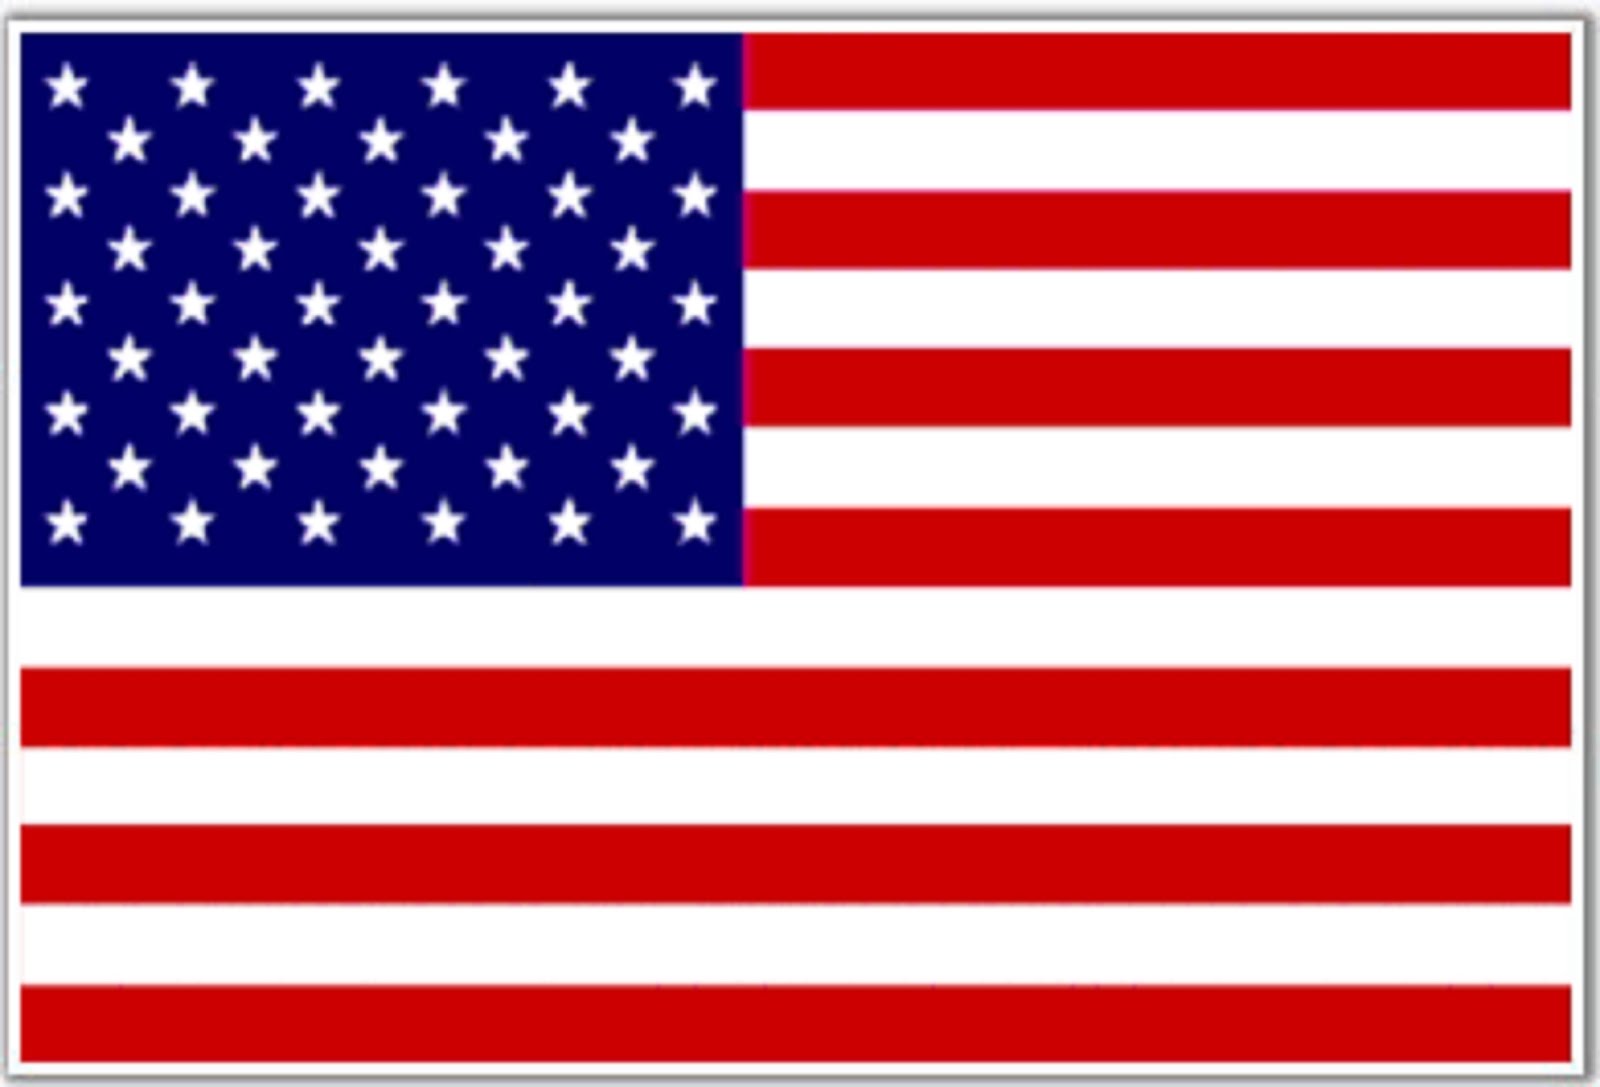 THE UNITED STATES FLAG